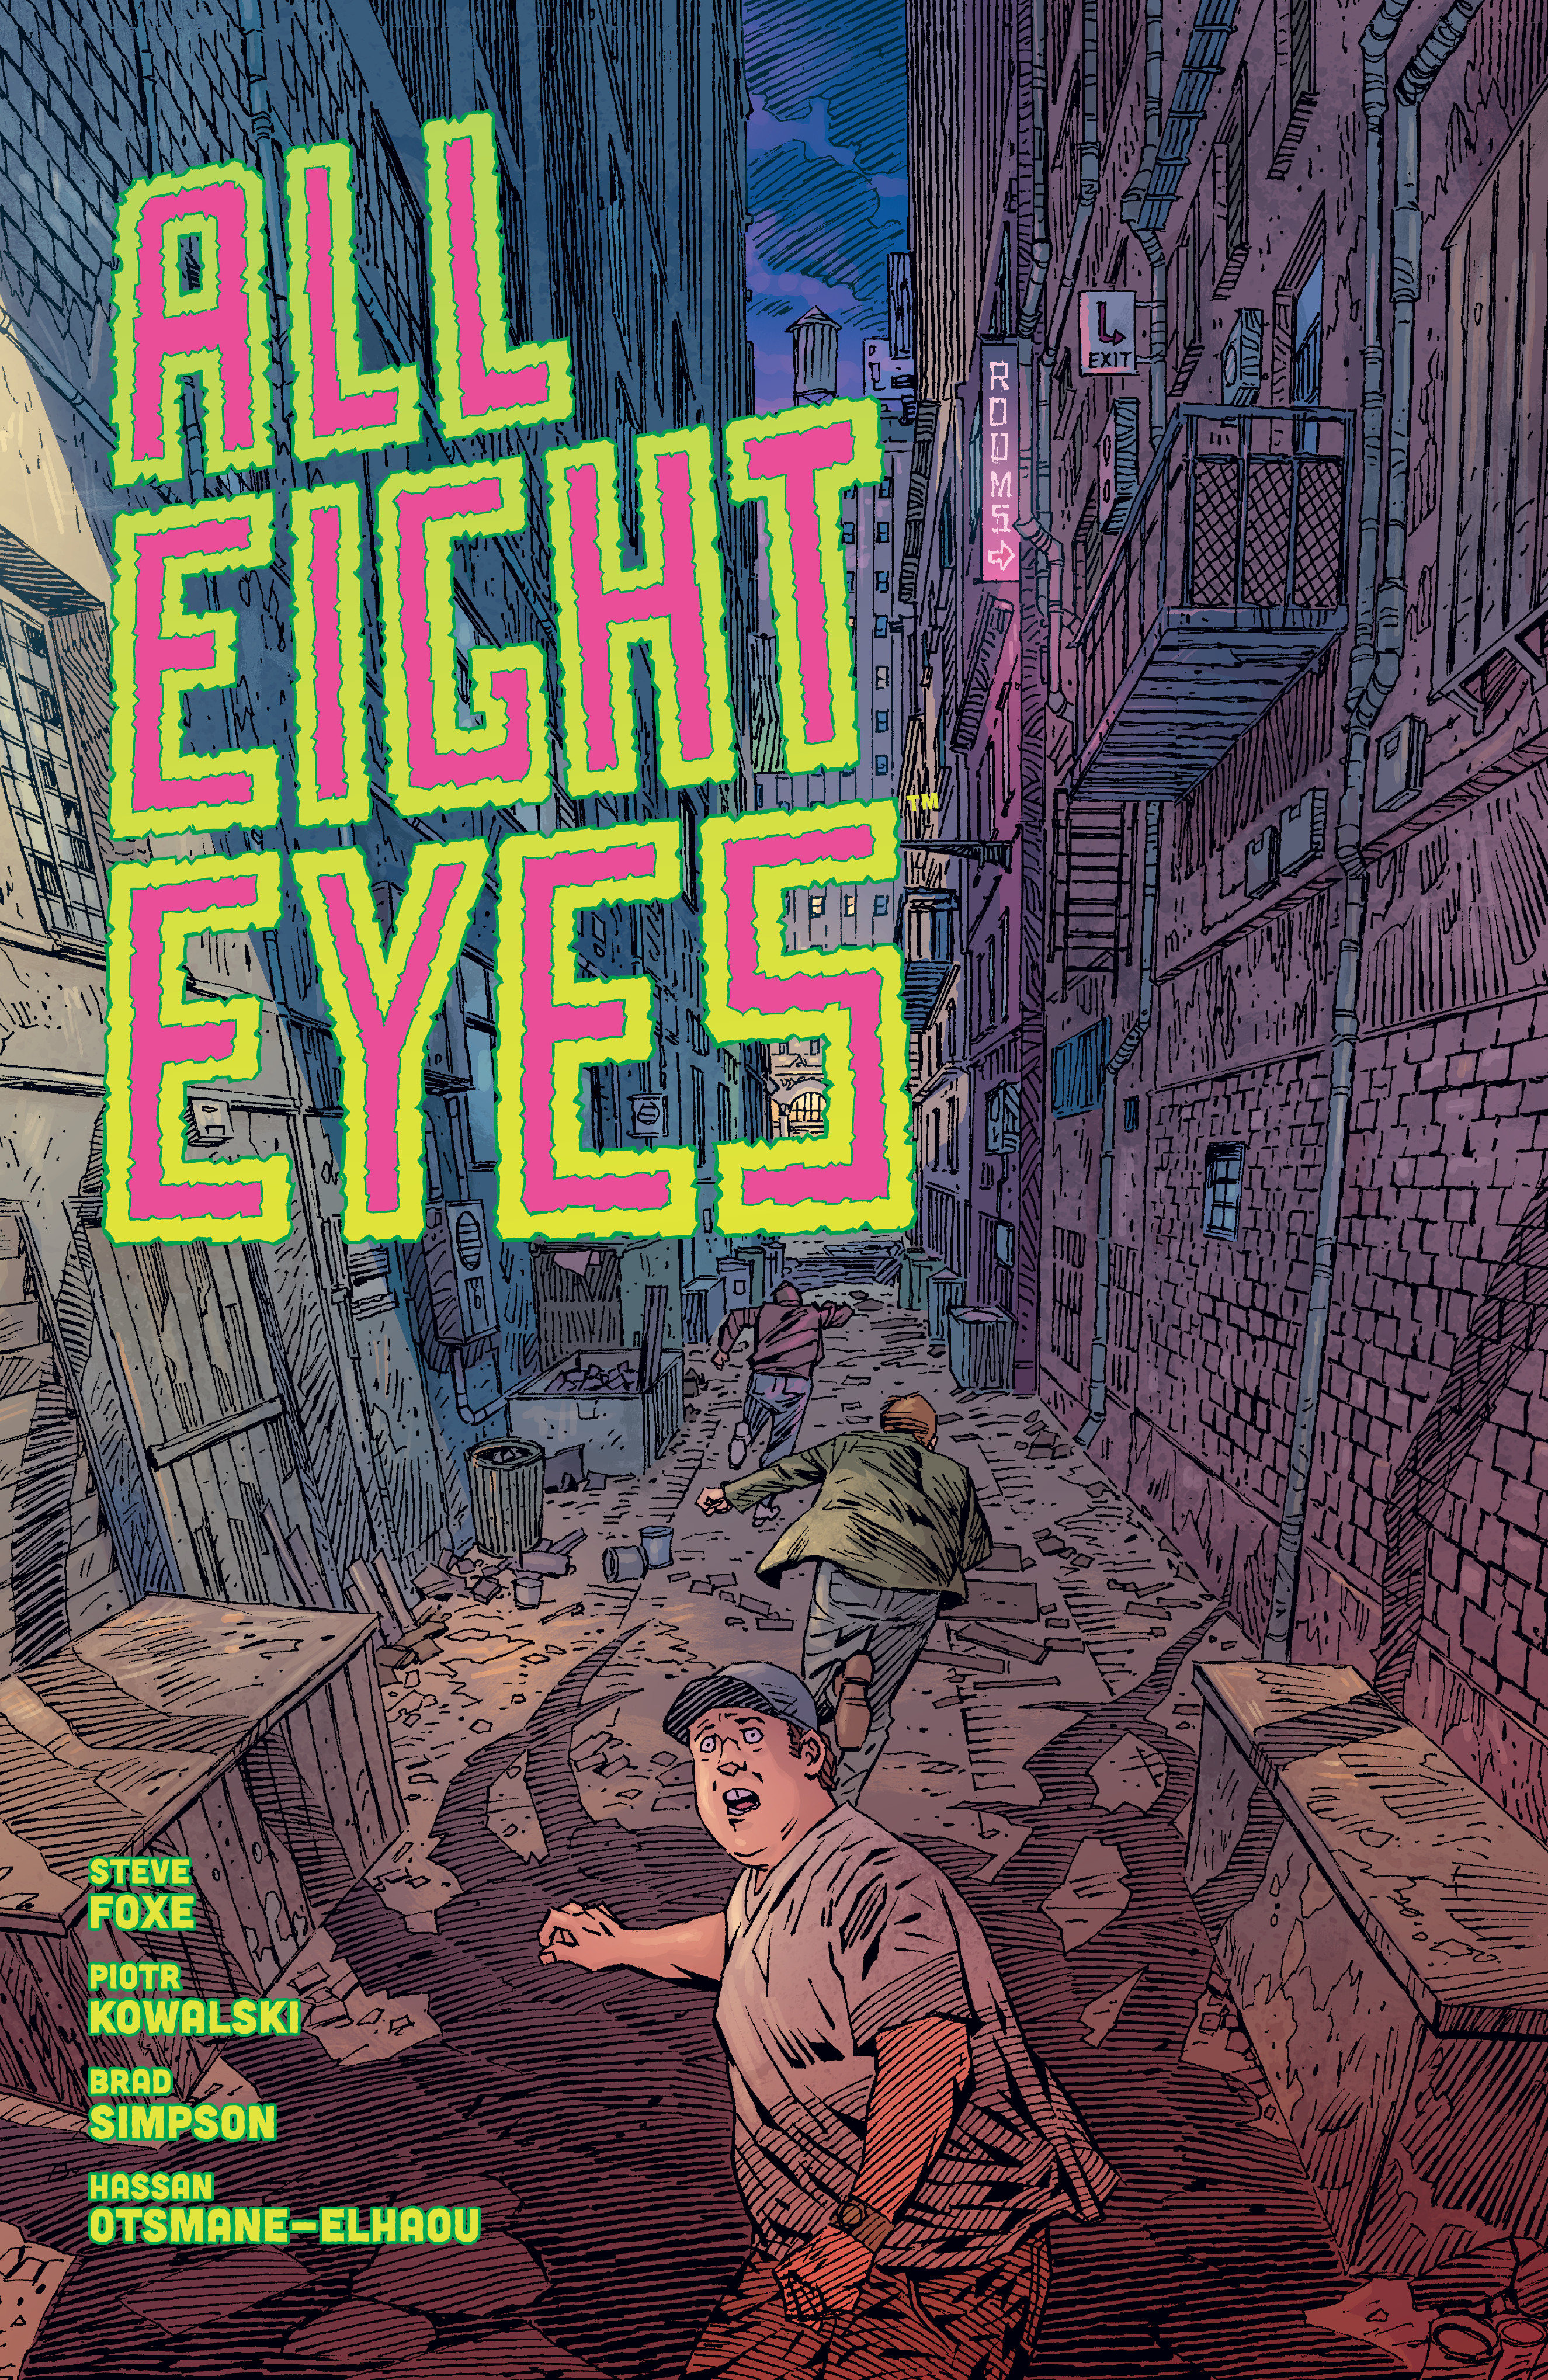 All Eight Eyes #3 Cover B David Romero